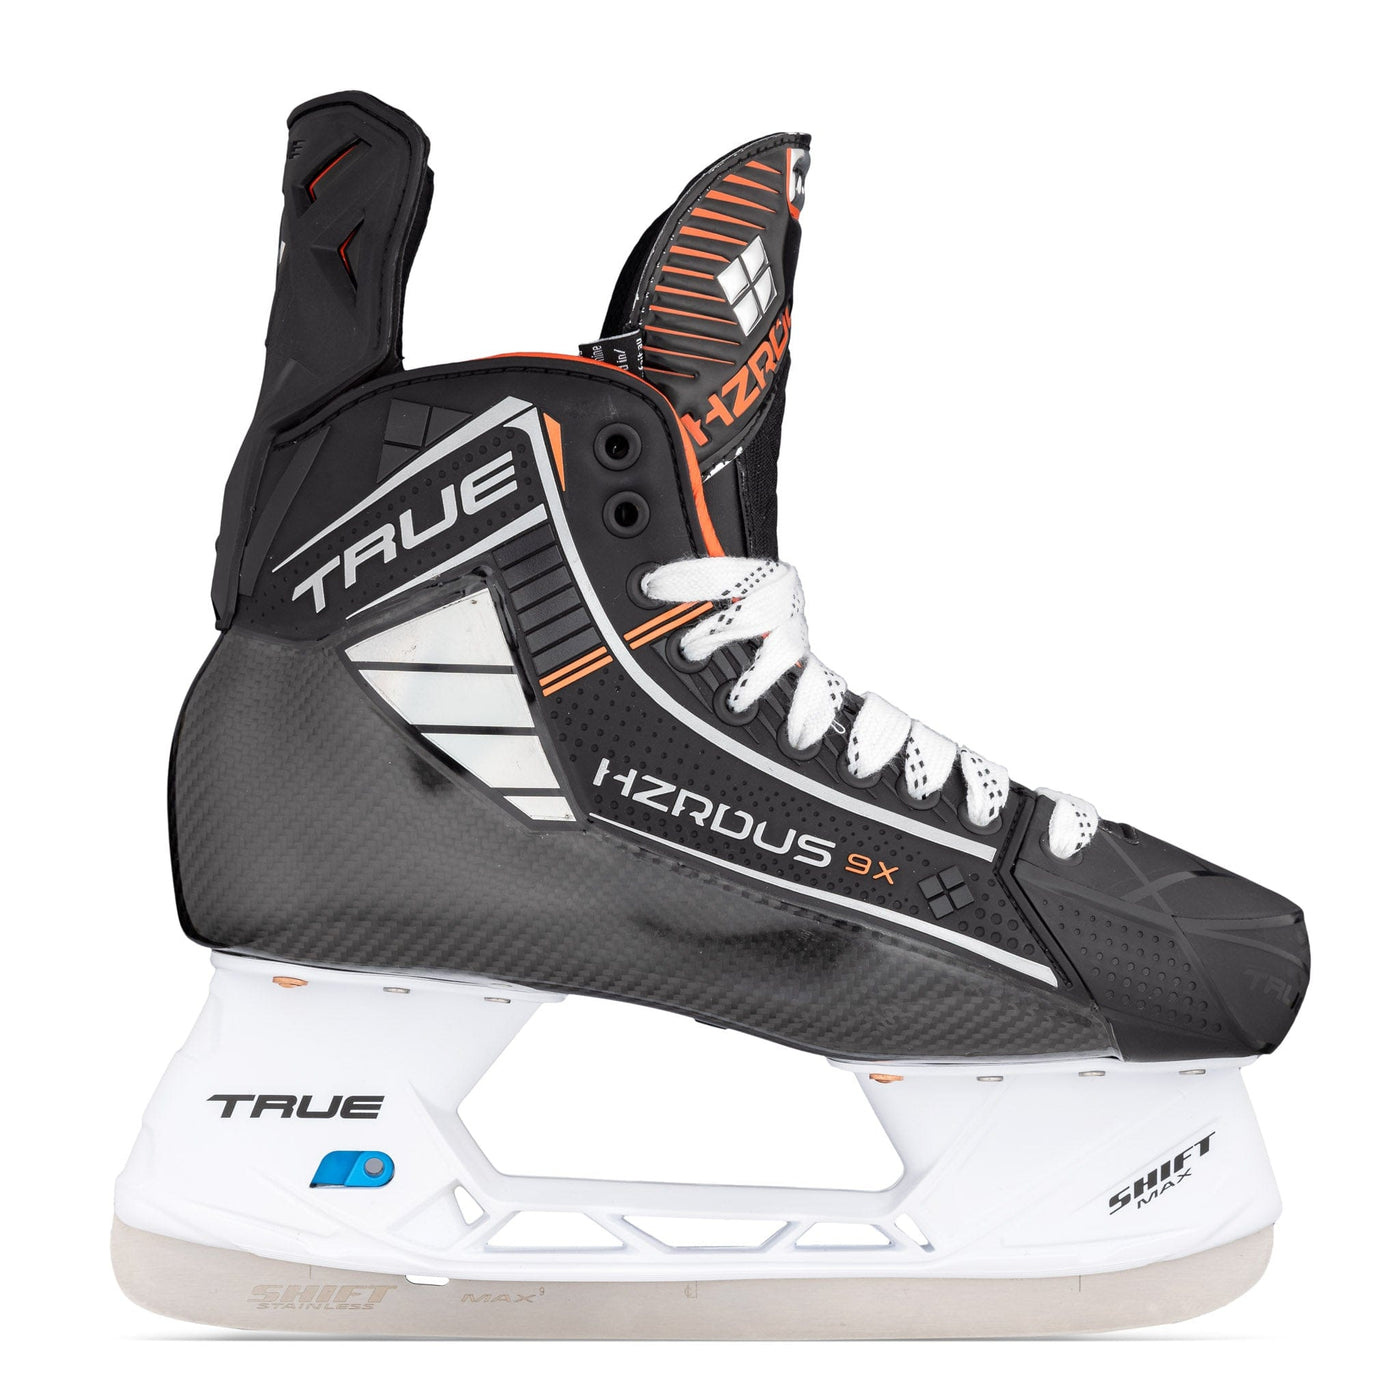 True HZRDUS 9X Senior Hockey Skates - The Hockey Shop Source For Sports